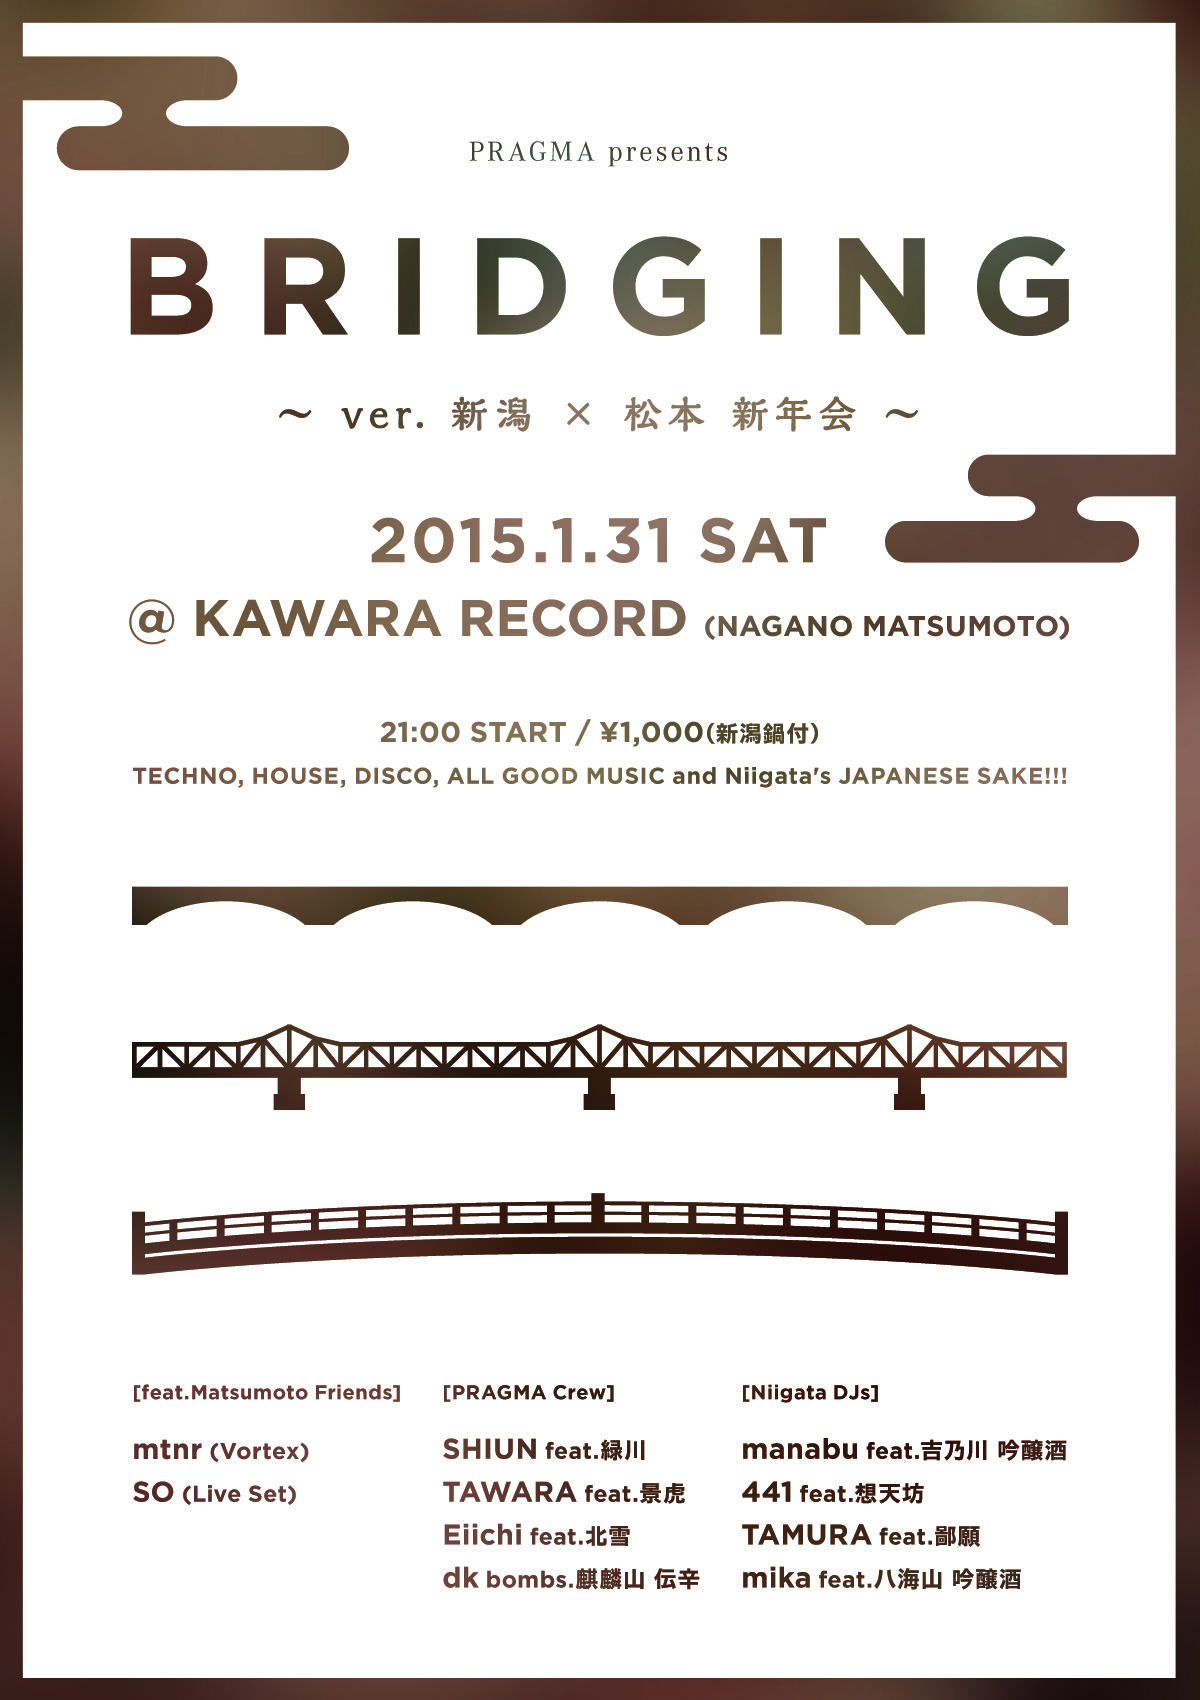 PRAGMA presents “BRIDGING” 〜 ver. 新潟 x 松本 新年会 〜